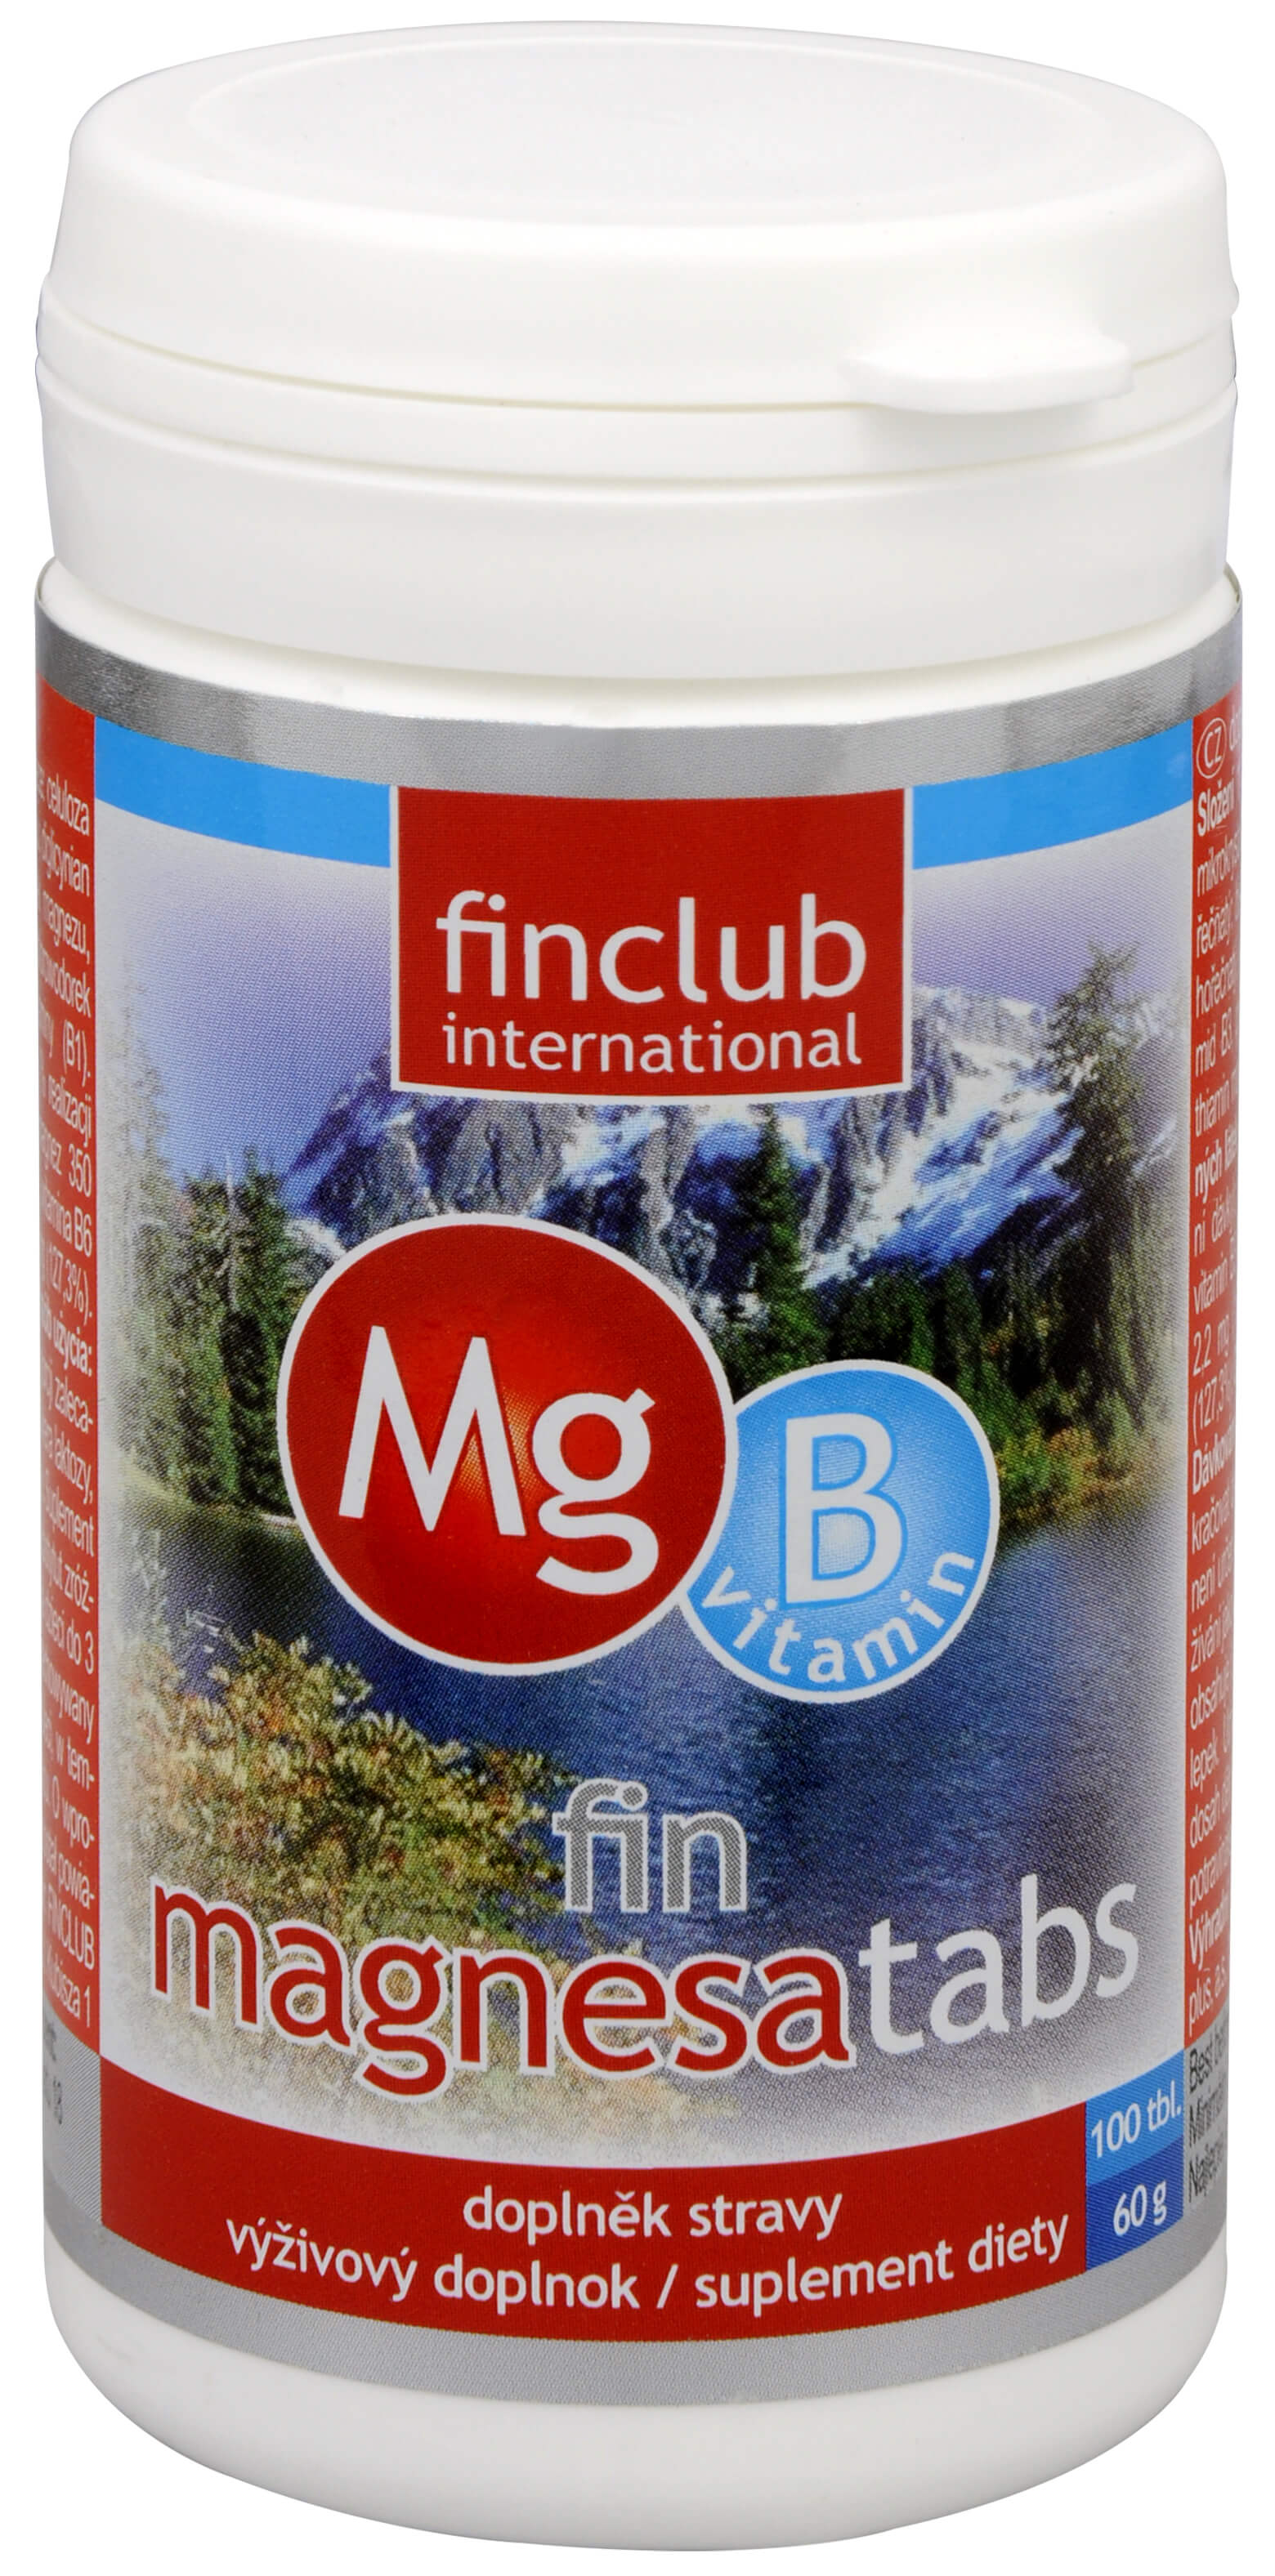 Zobrazit detail výrobku Finclub Fin Magnesatabs 100 tbl.